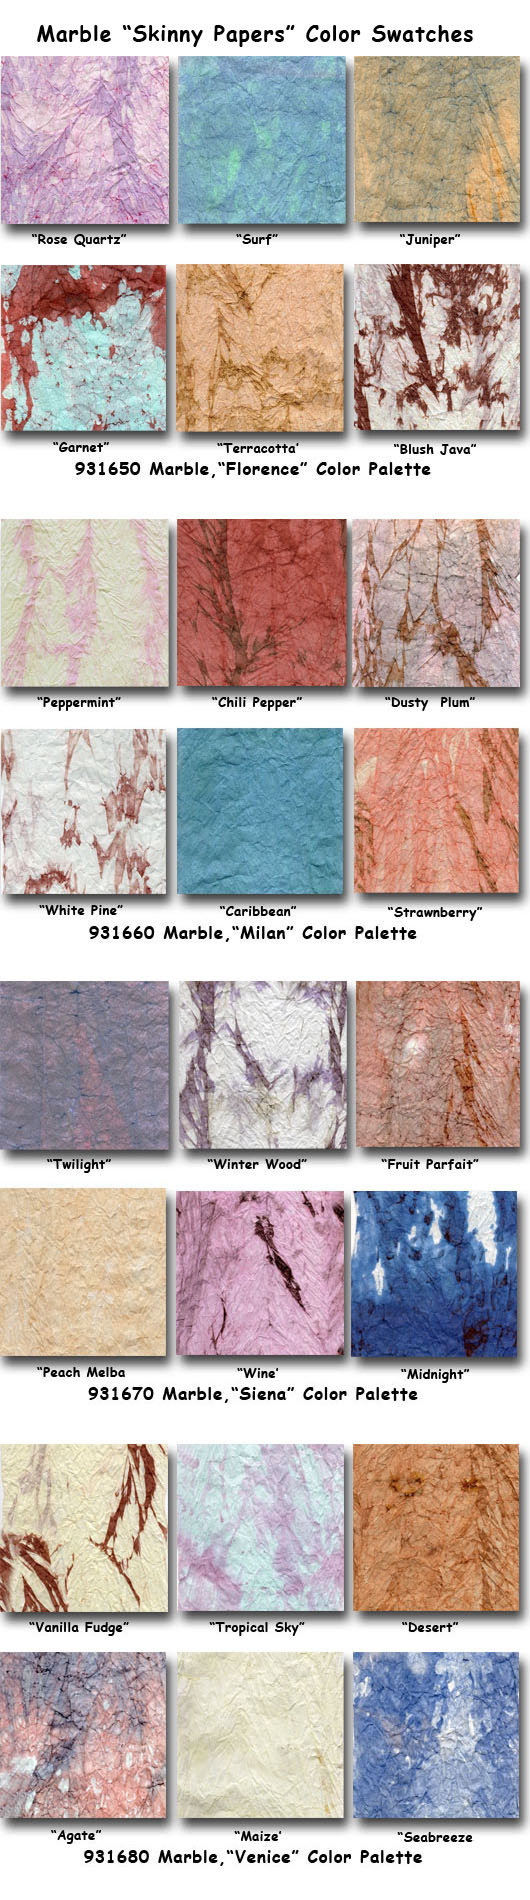 marble-skinny-papers-color-swatch-2.jpg